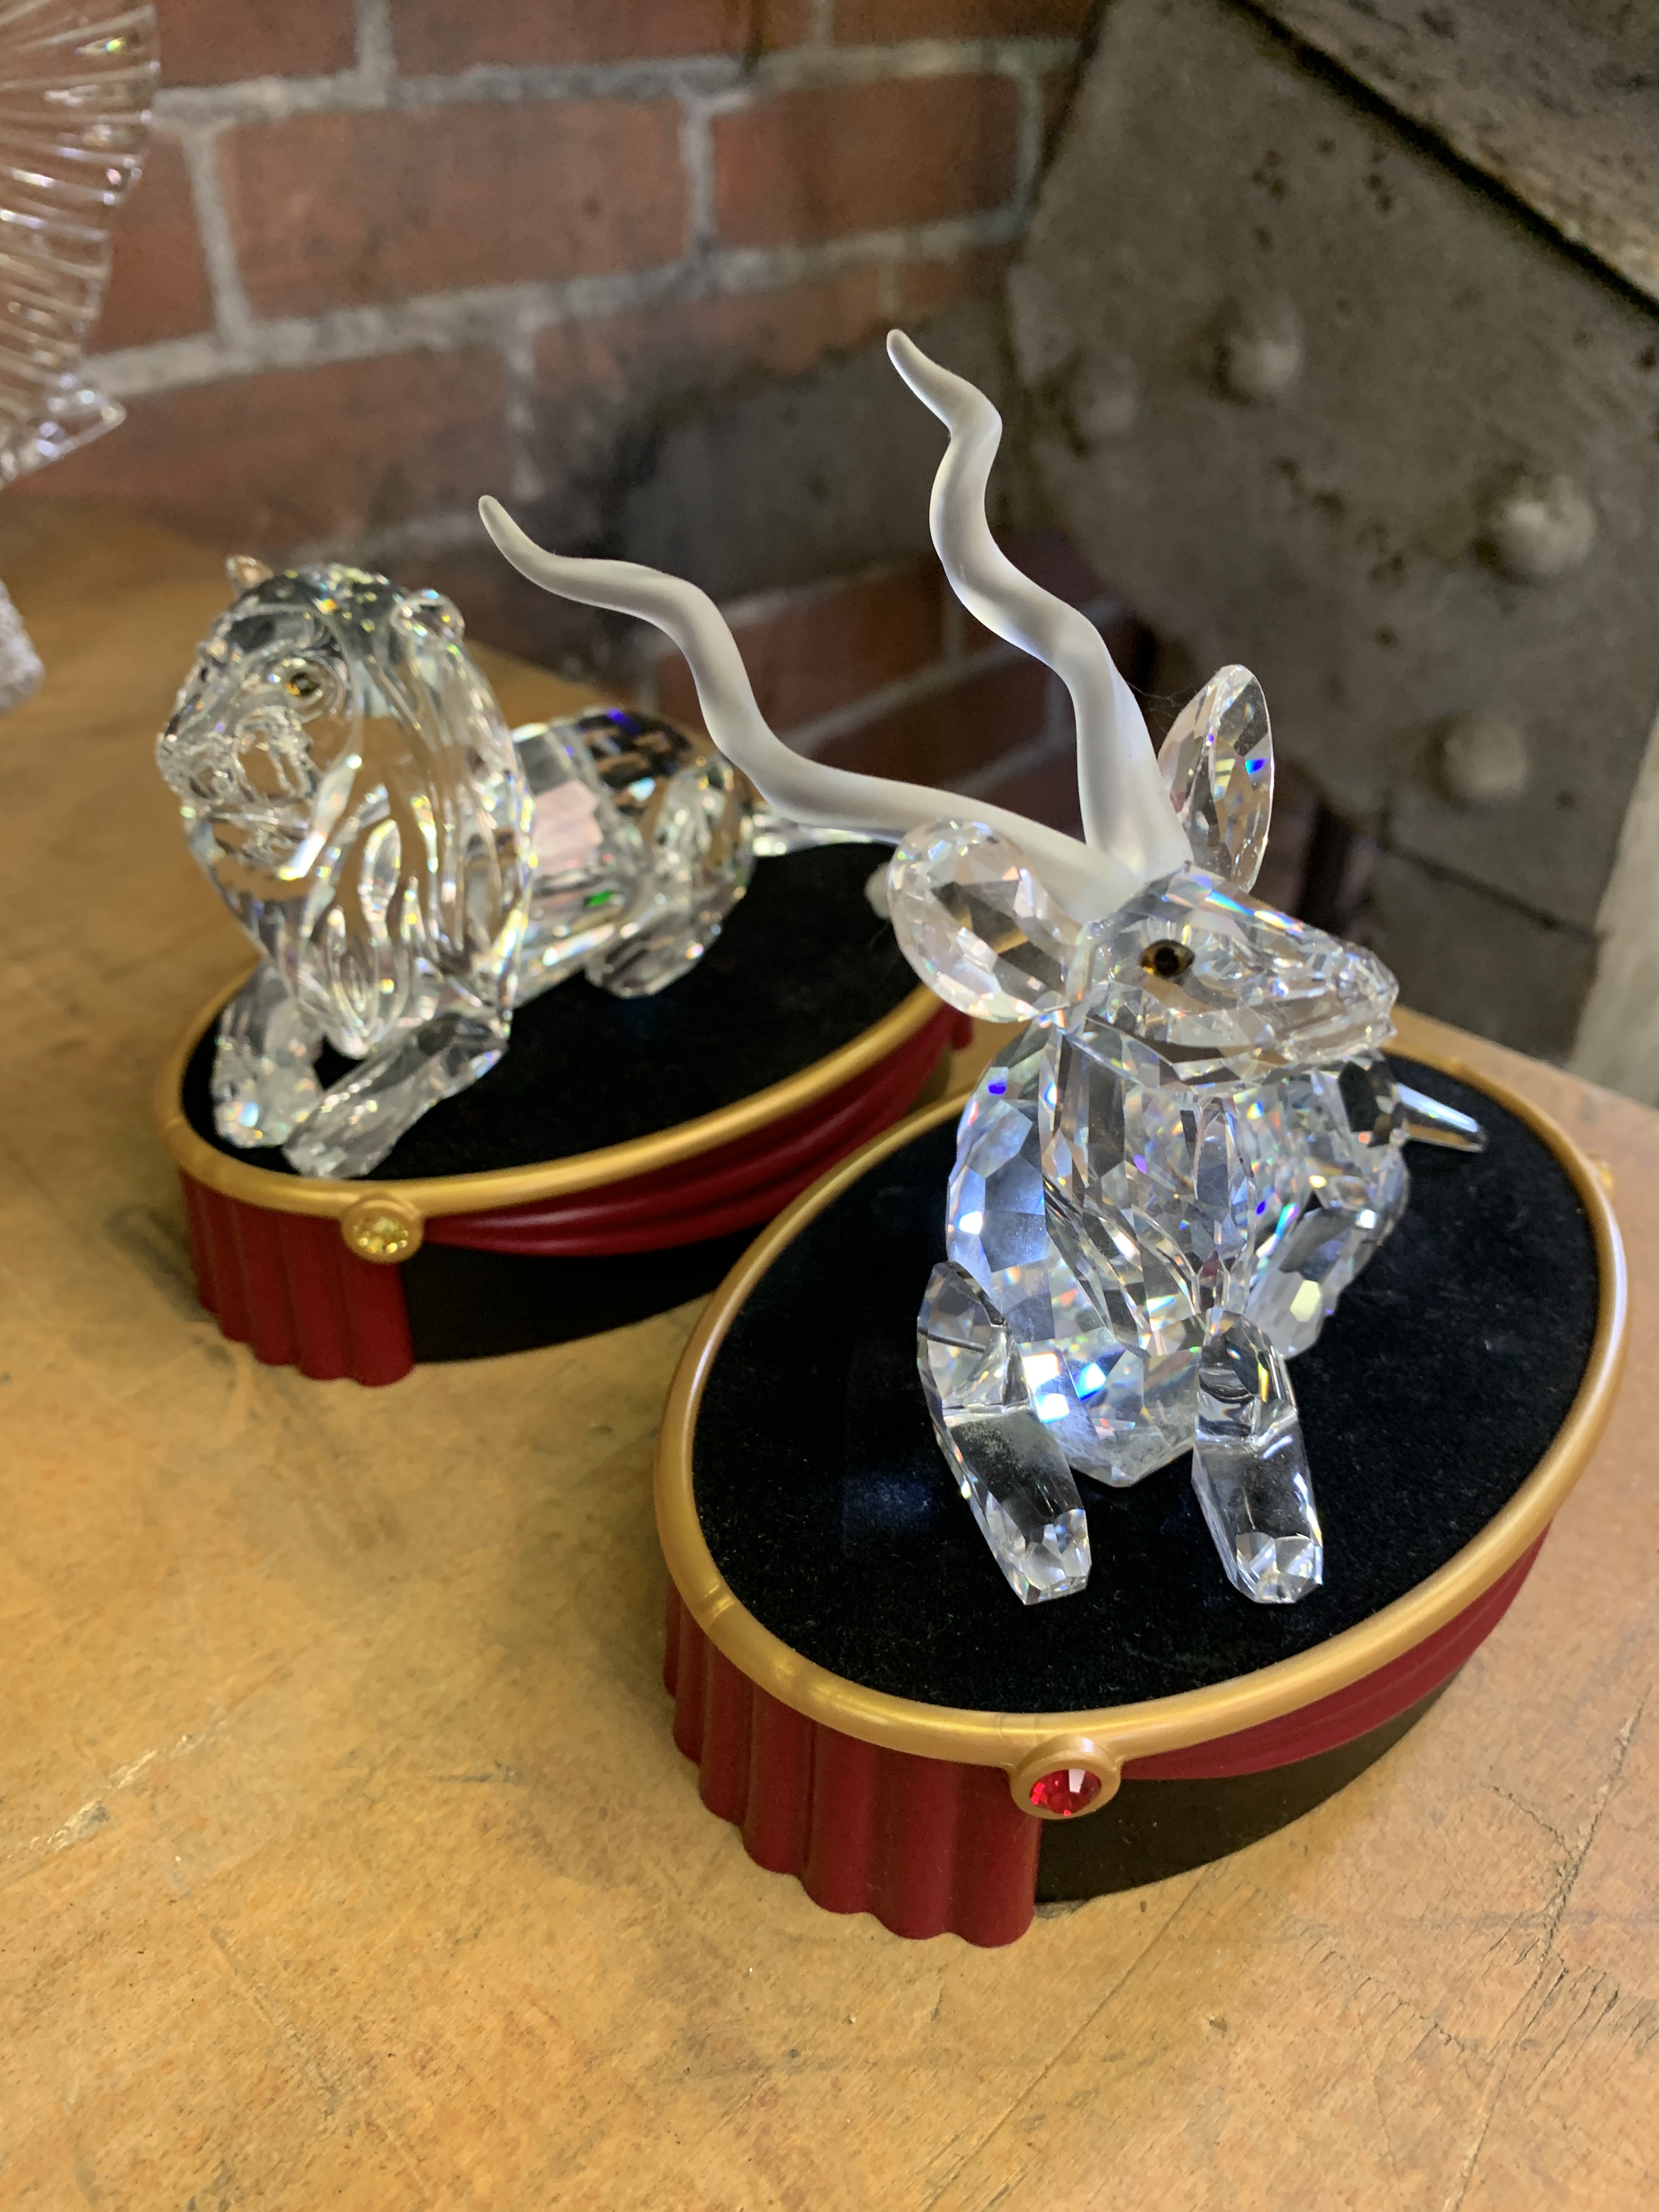 Two Swarovski crystal figurines